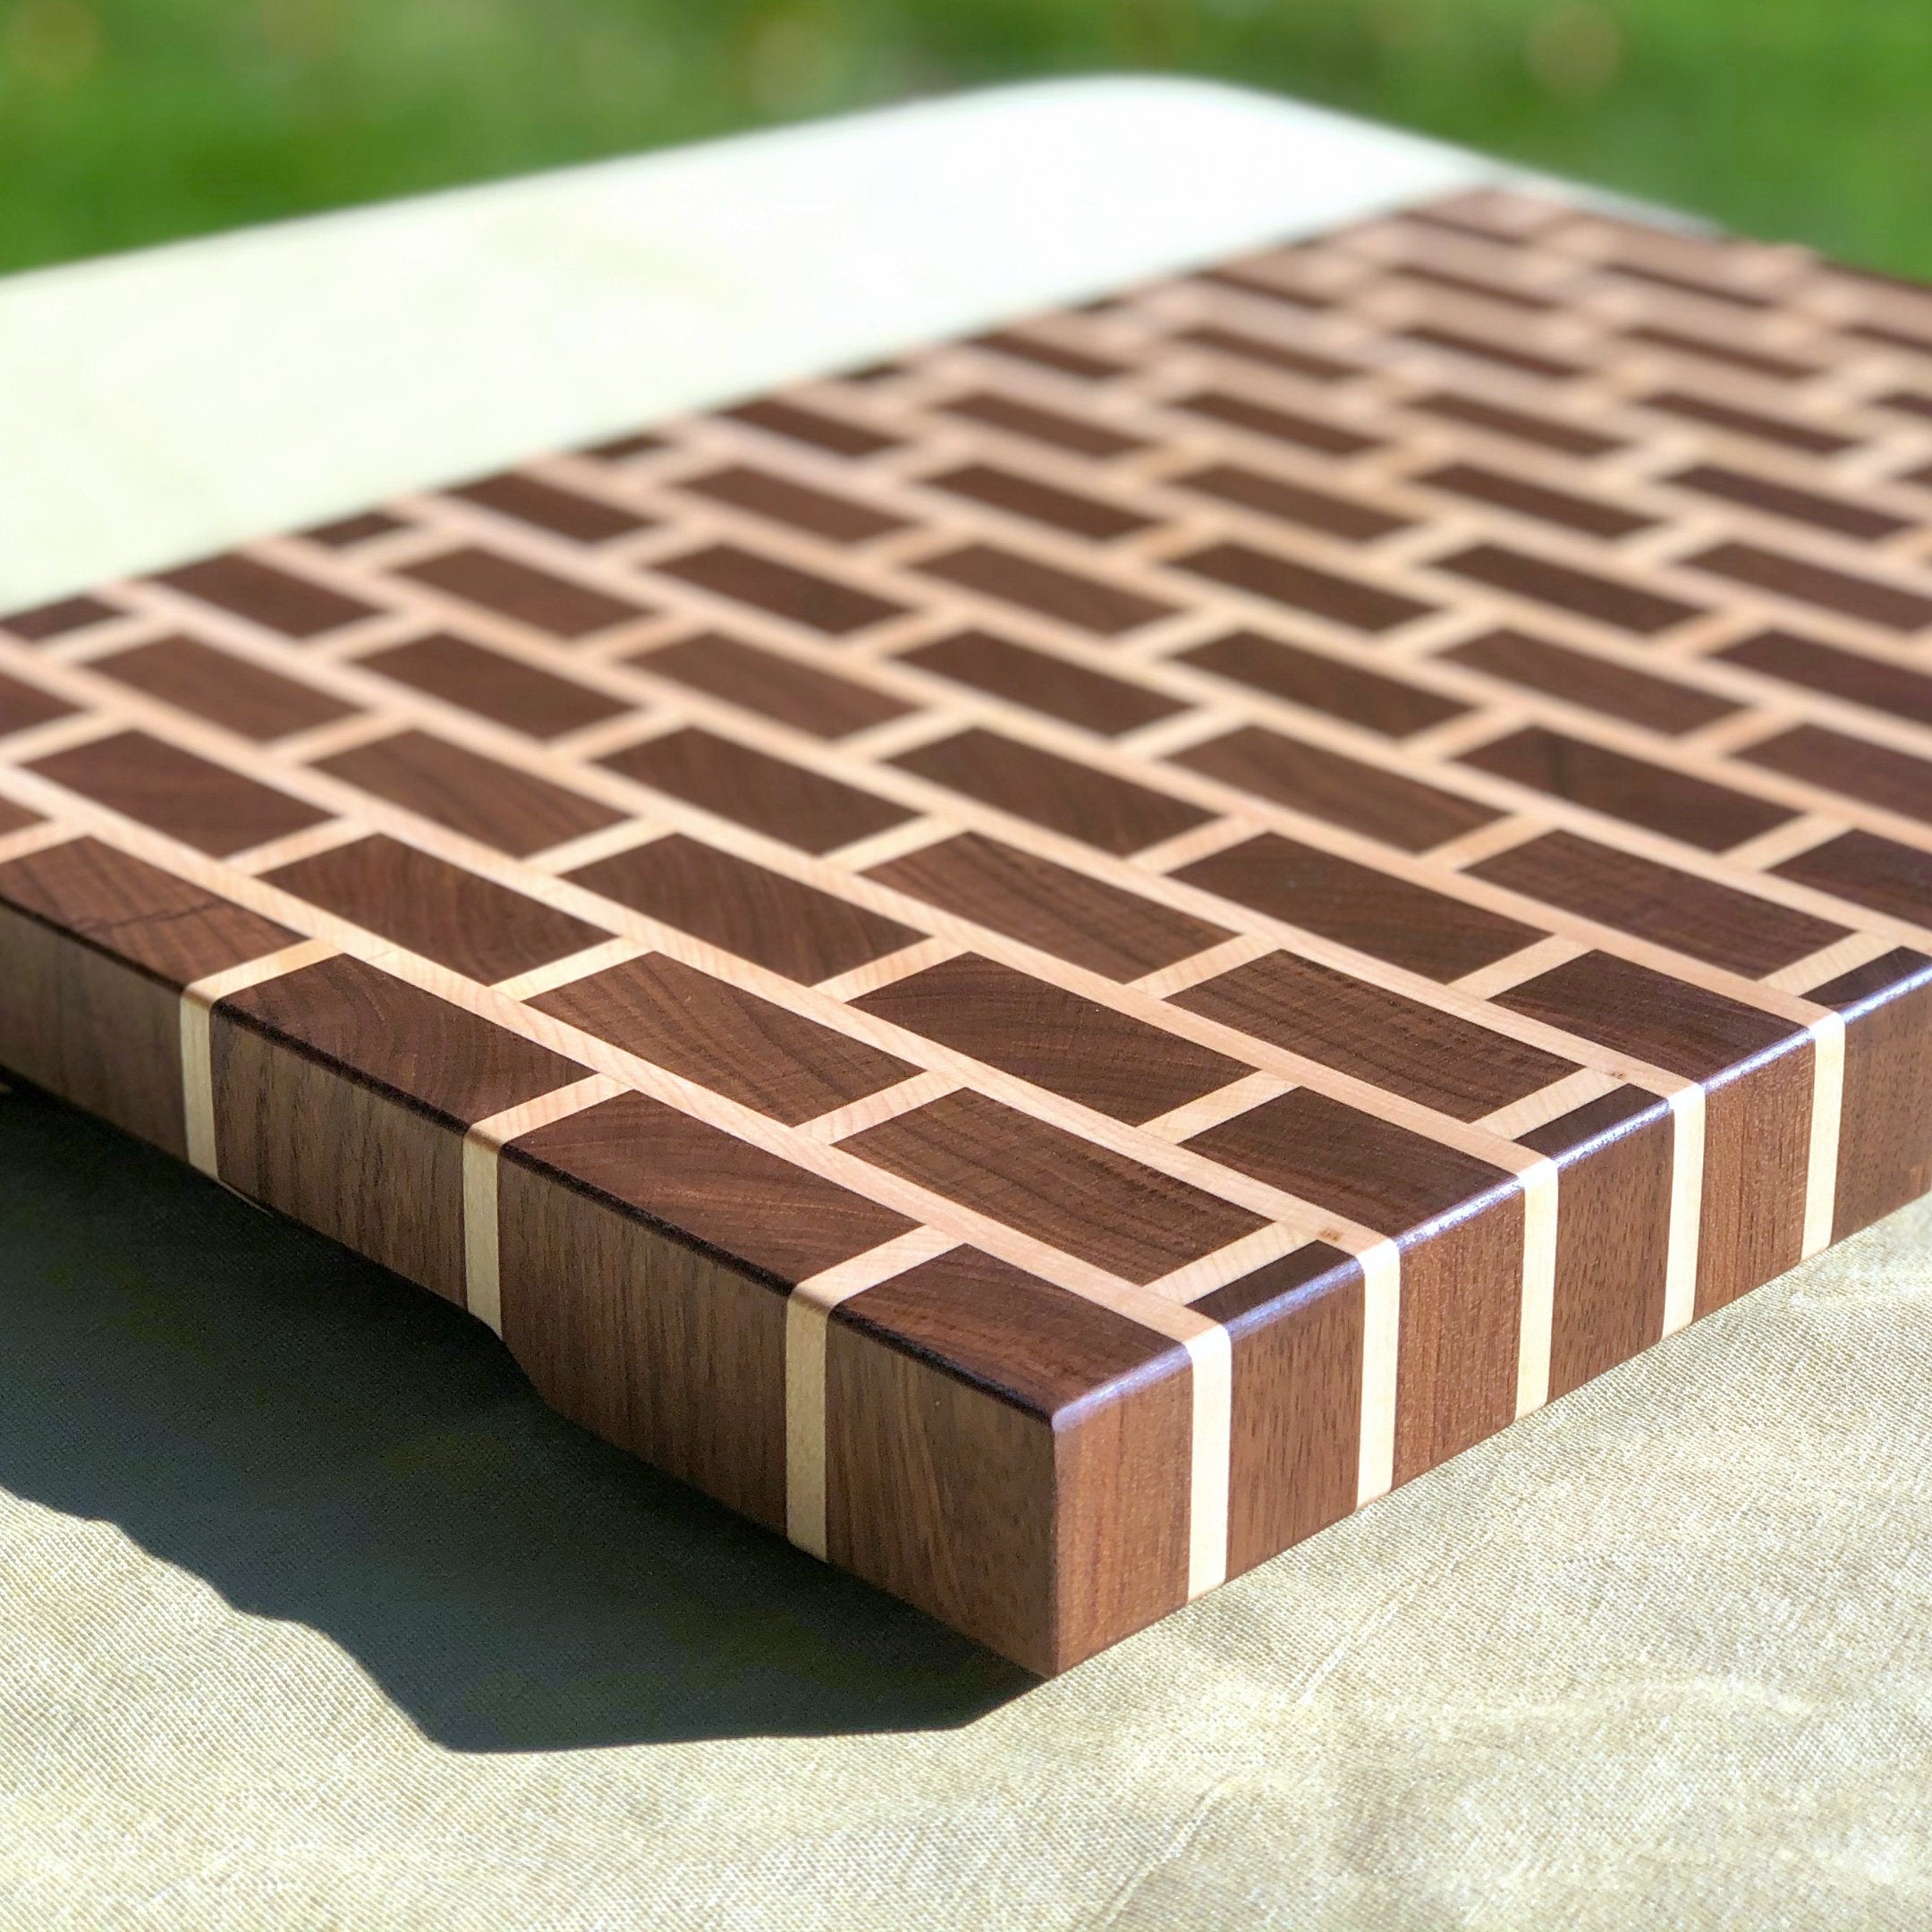 Brick Pattern Wooden Chopping Board